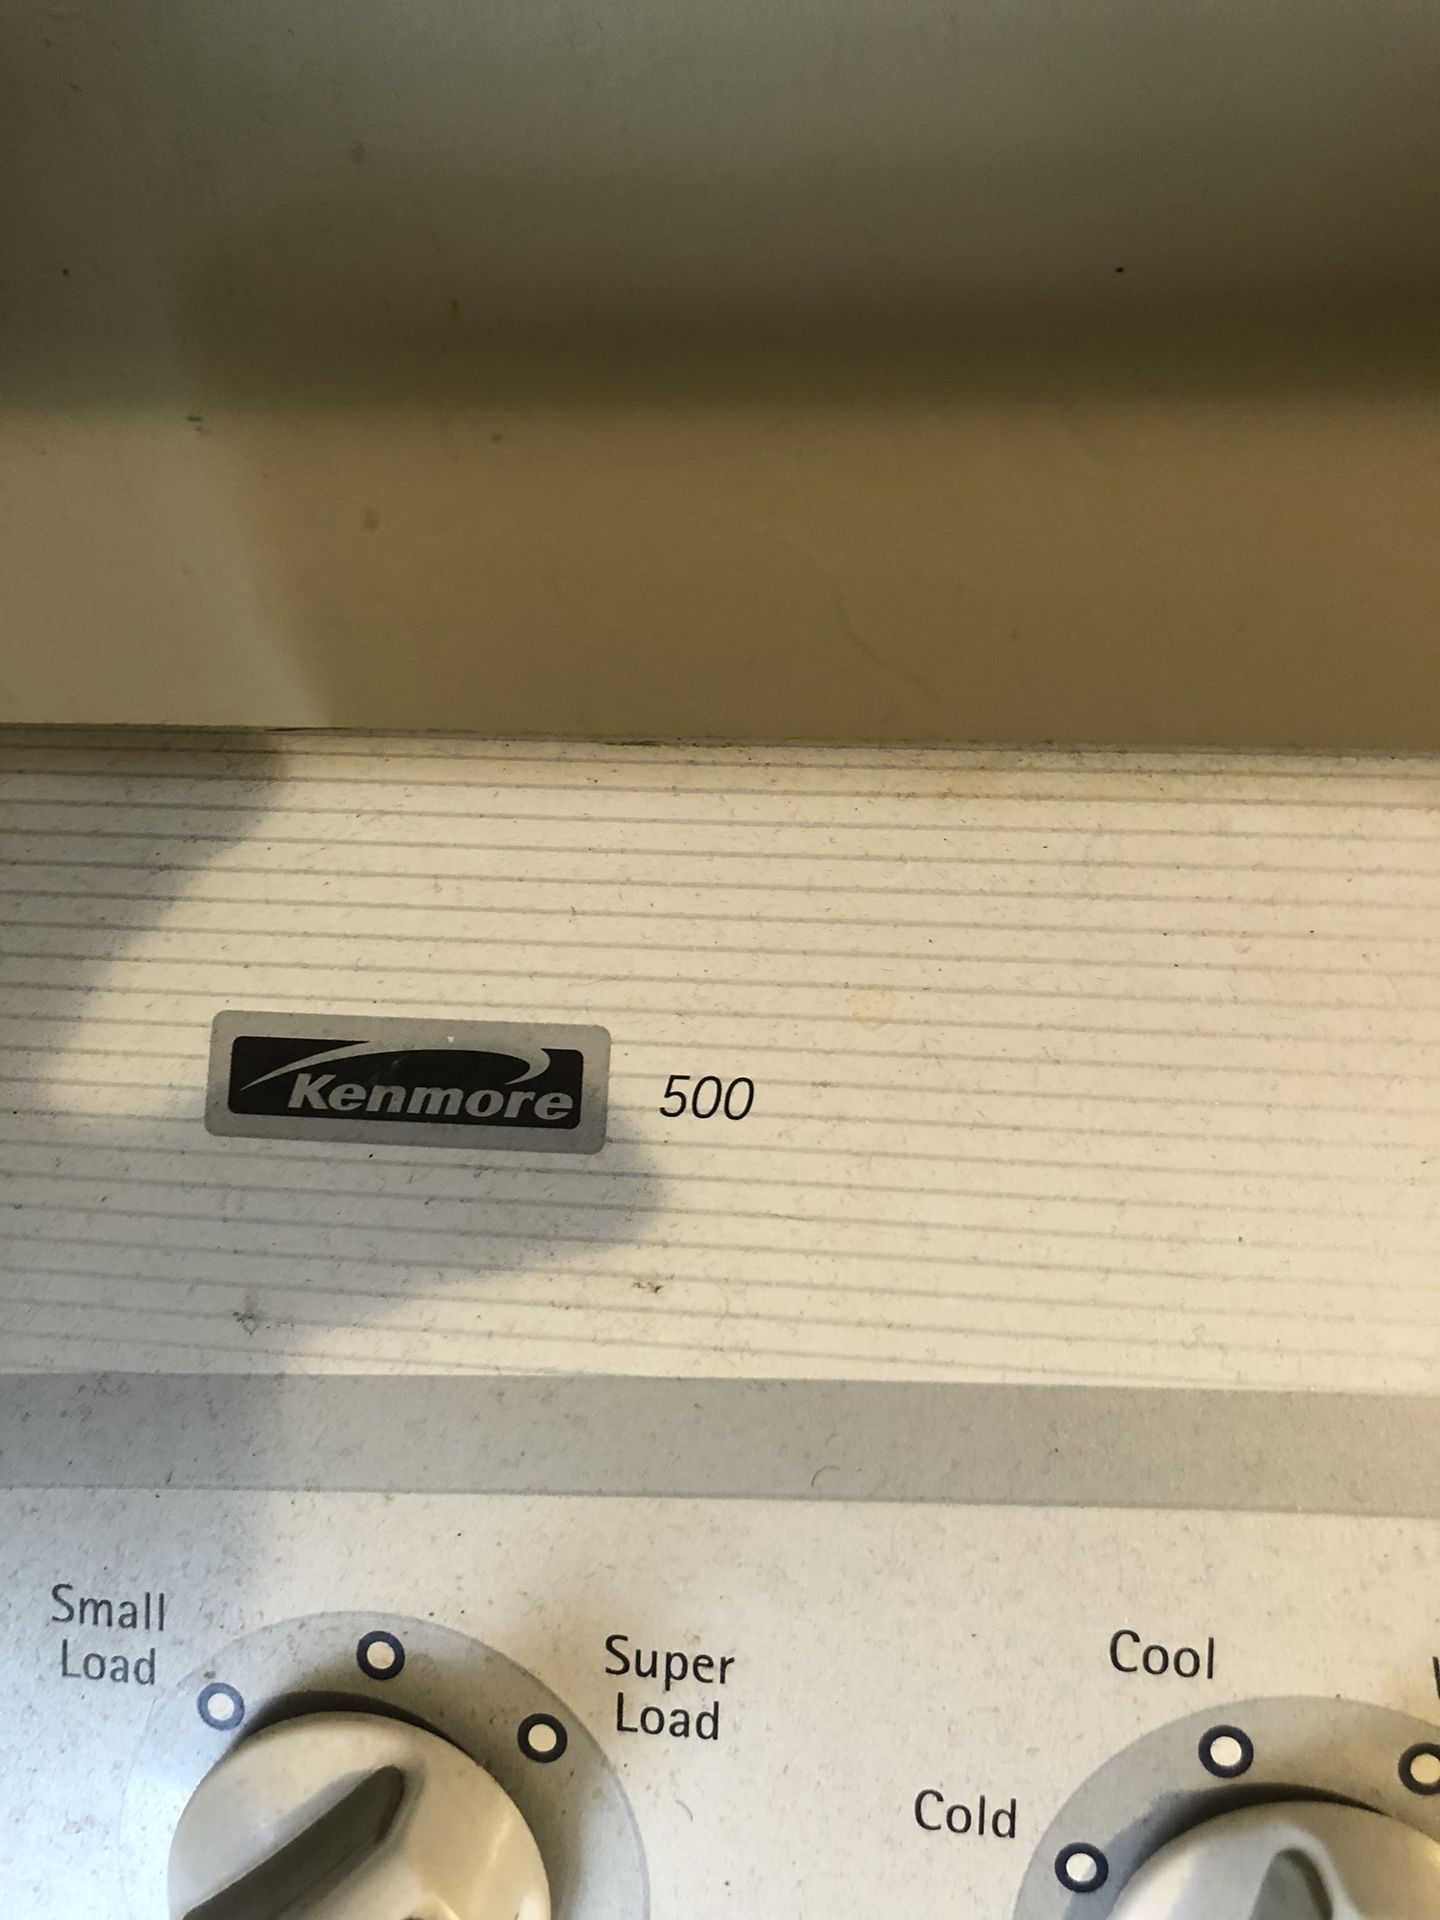 Kenmore 500 washing Machine & Speed Queen Heavy duty Dryer.